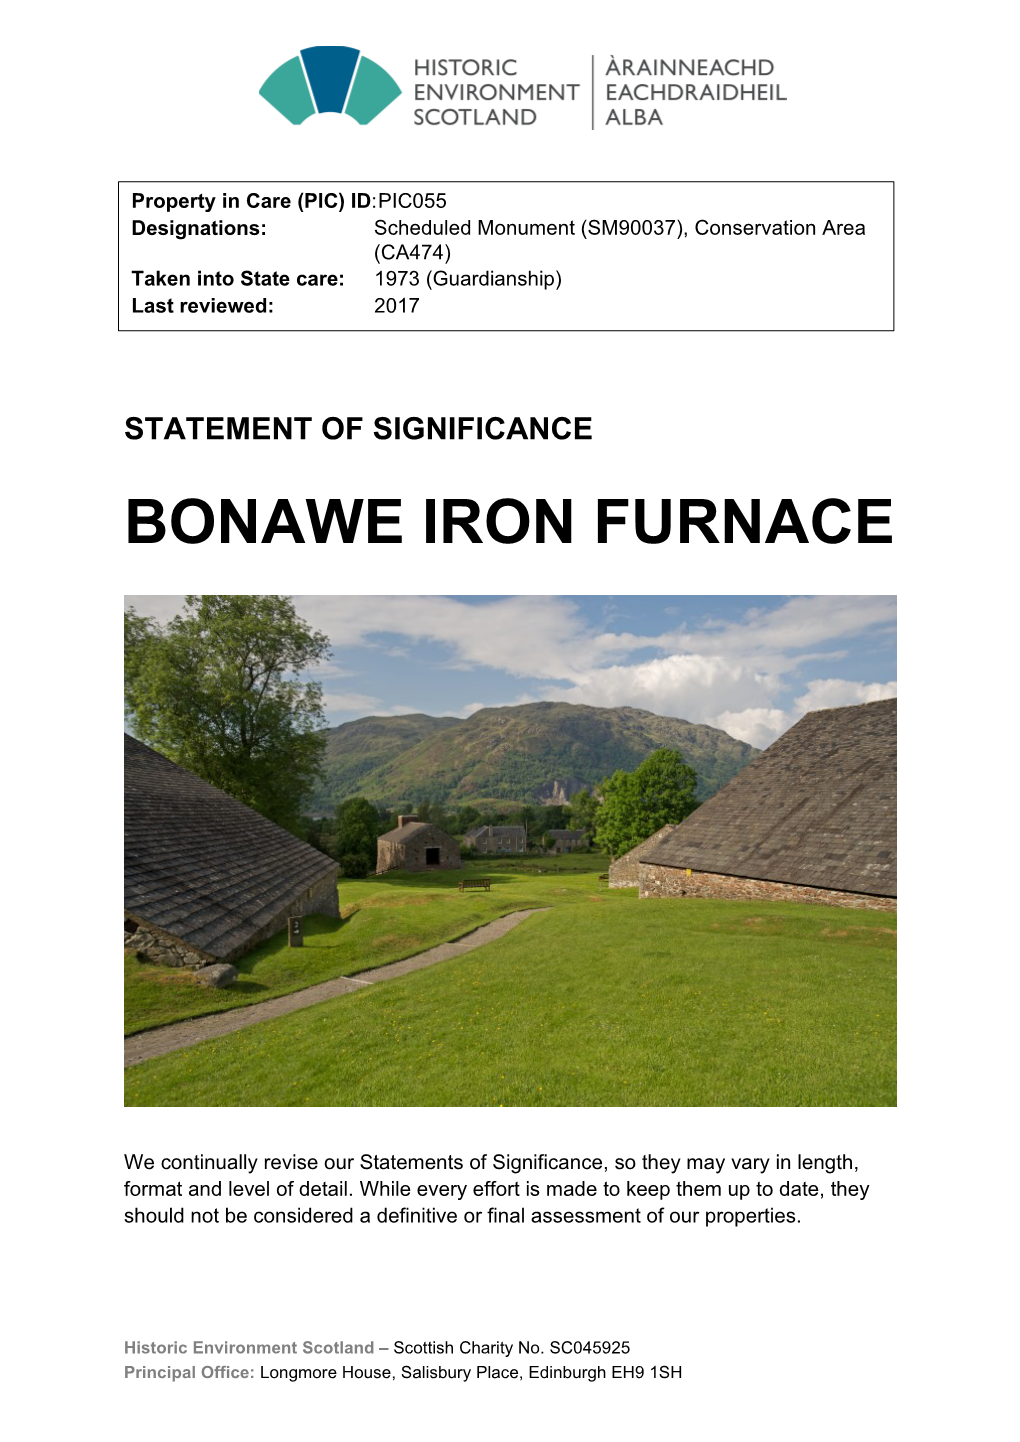 Bonawe Historic Iron Furnace Statement of Significance